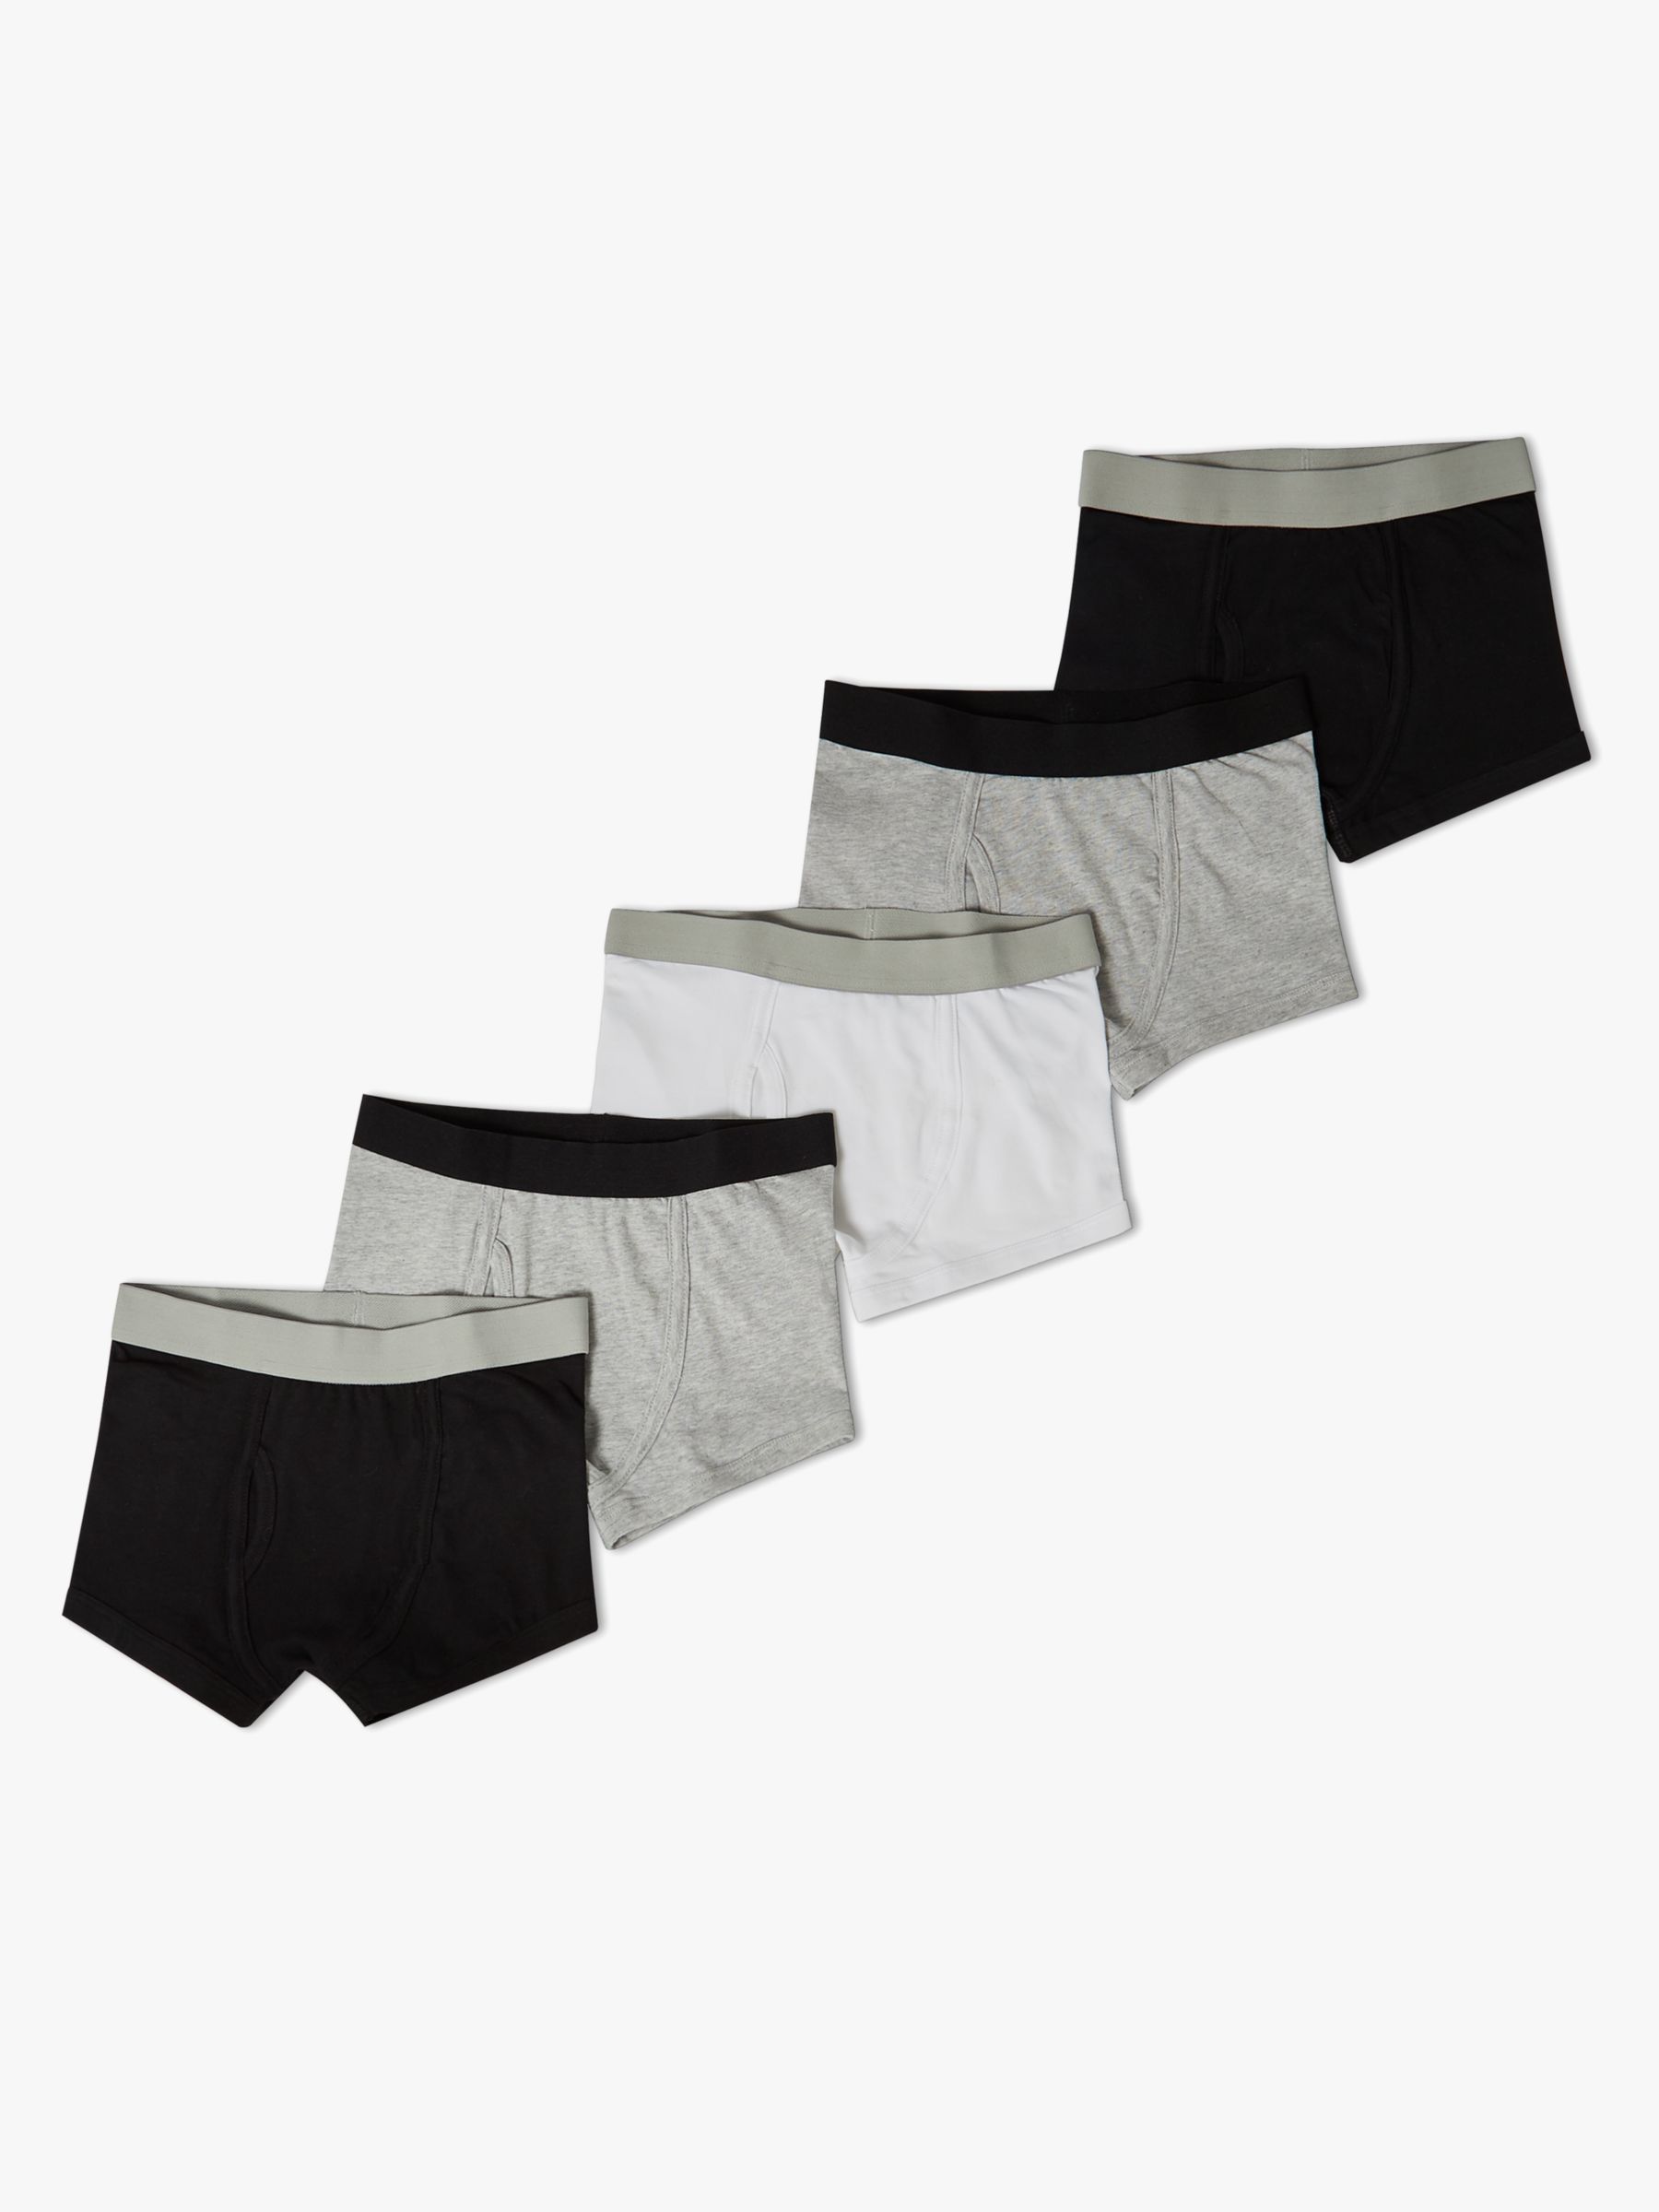 Ex John Lewis PJ Masks Kids boys pack of 5 Briefs Underwear pants 2 3 4 5 6  year